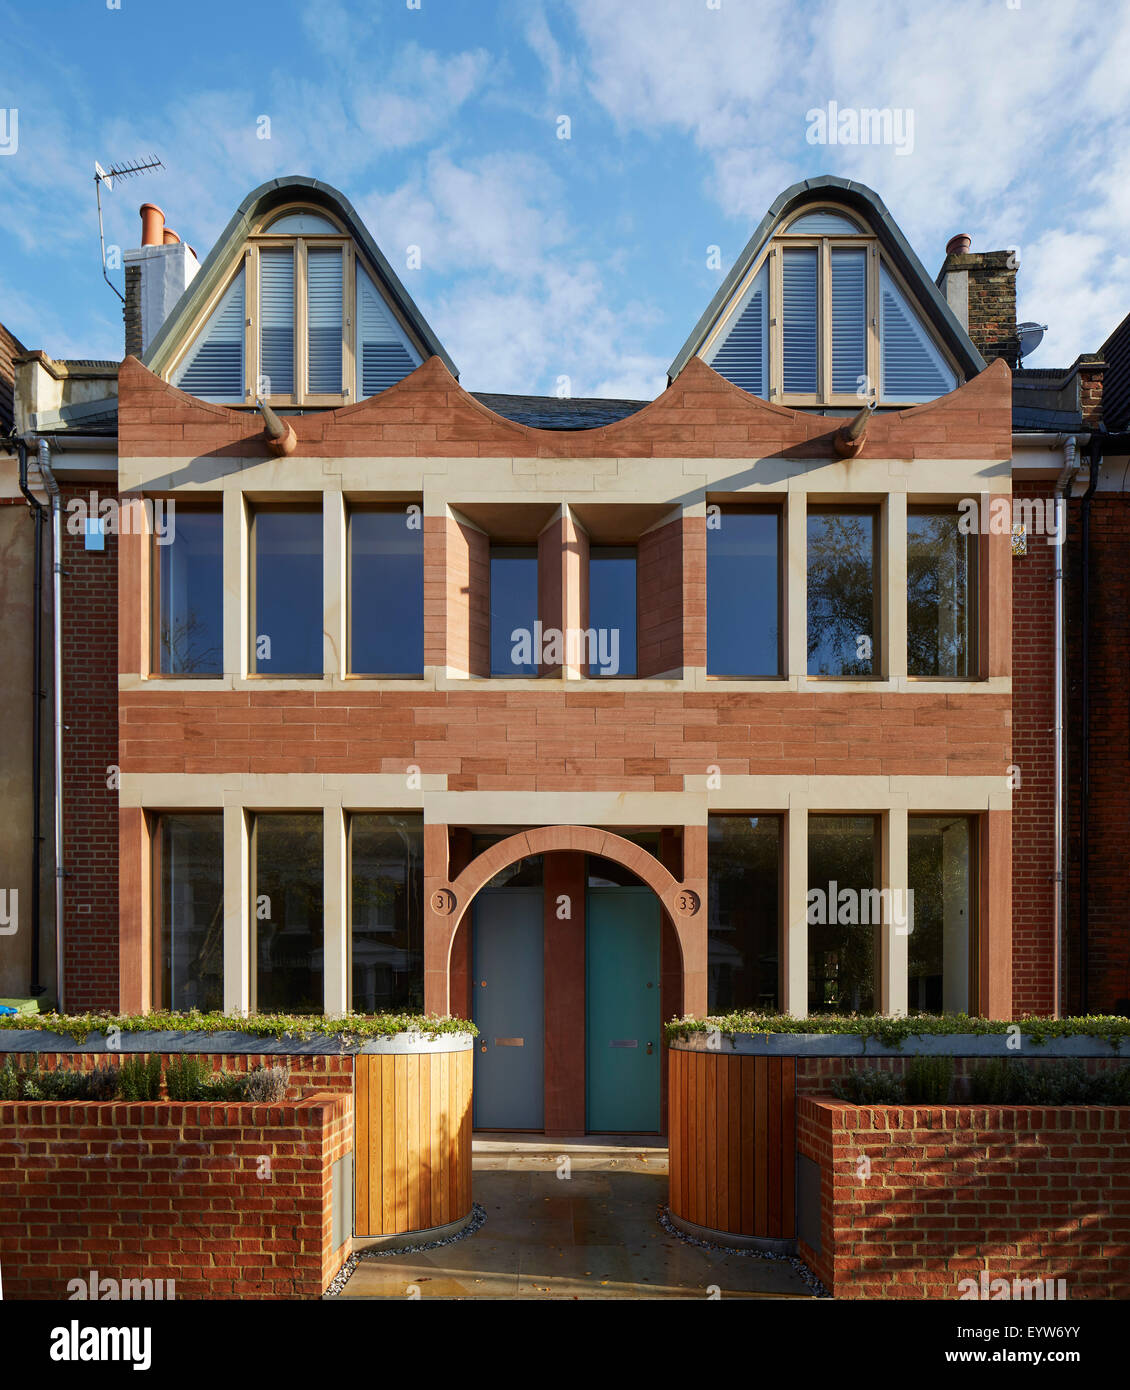 Symmetrical front elevation. London Brownstones, London, United Kingdom. Architect: Knox Bhavan Architects LLP, 2014. Stock Photo